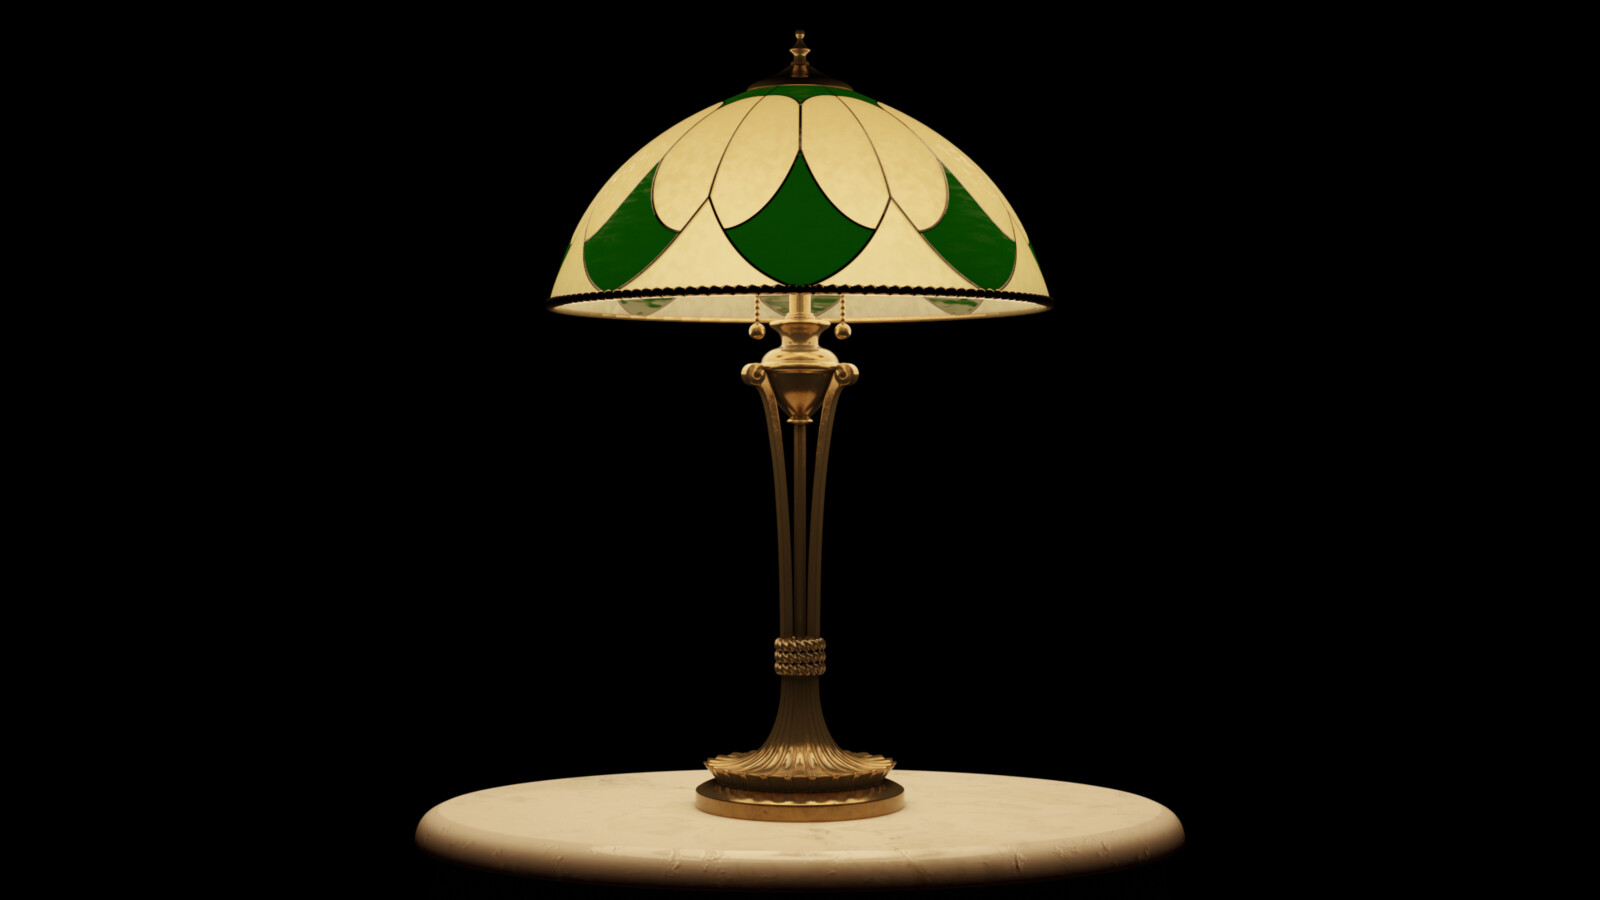 Find it here! https://artofkarlb.com/store/jn7N/antique-table-lamp-001